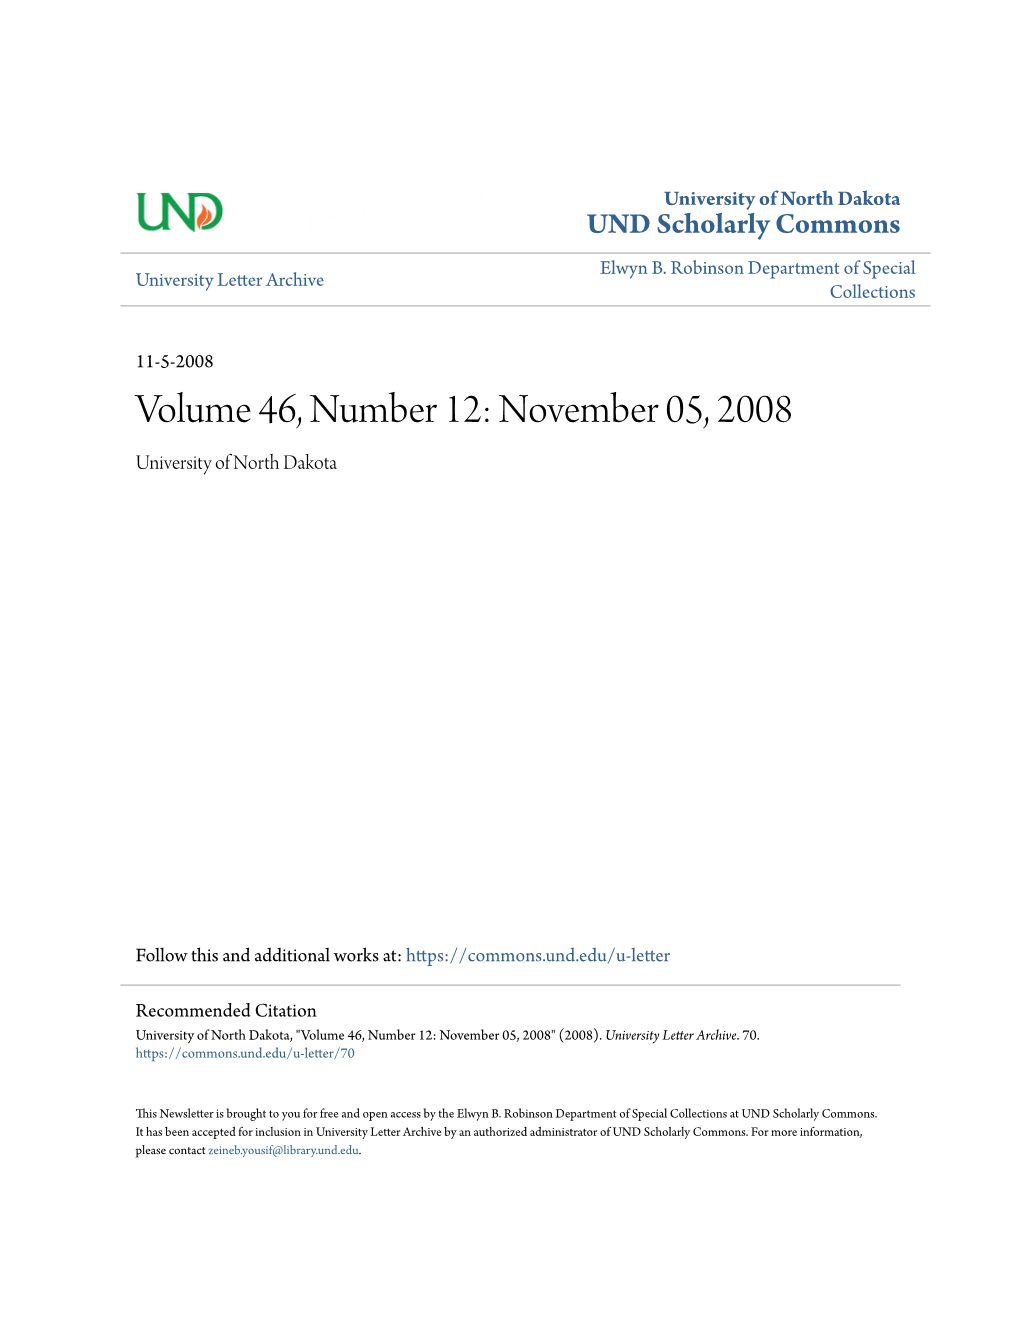 Volume 46, Number 12: November 05, 2008 University of North Dakota